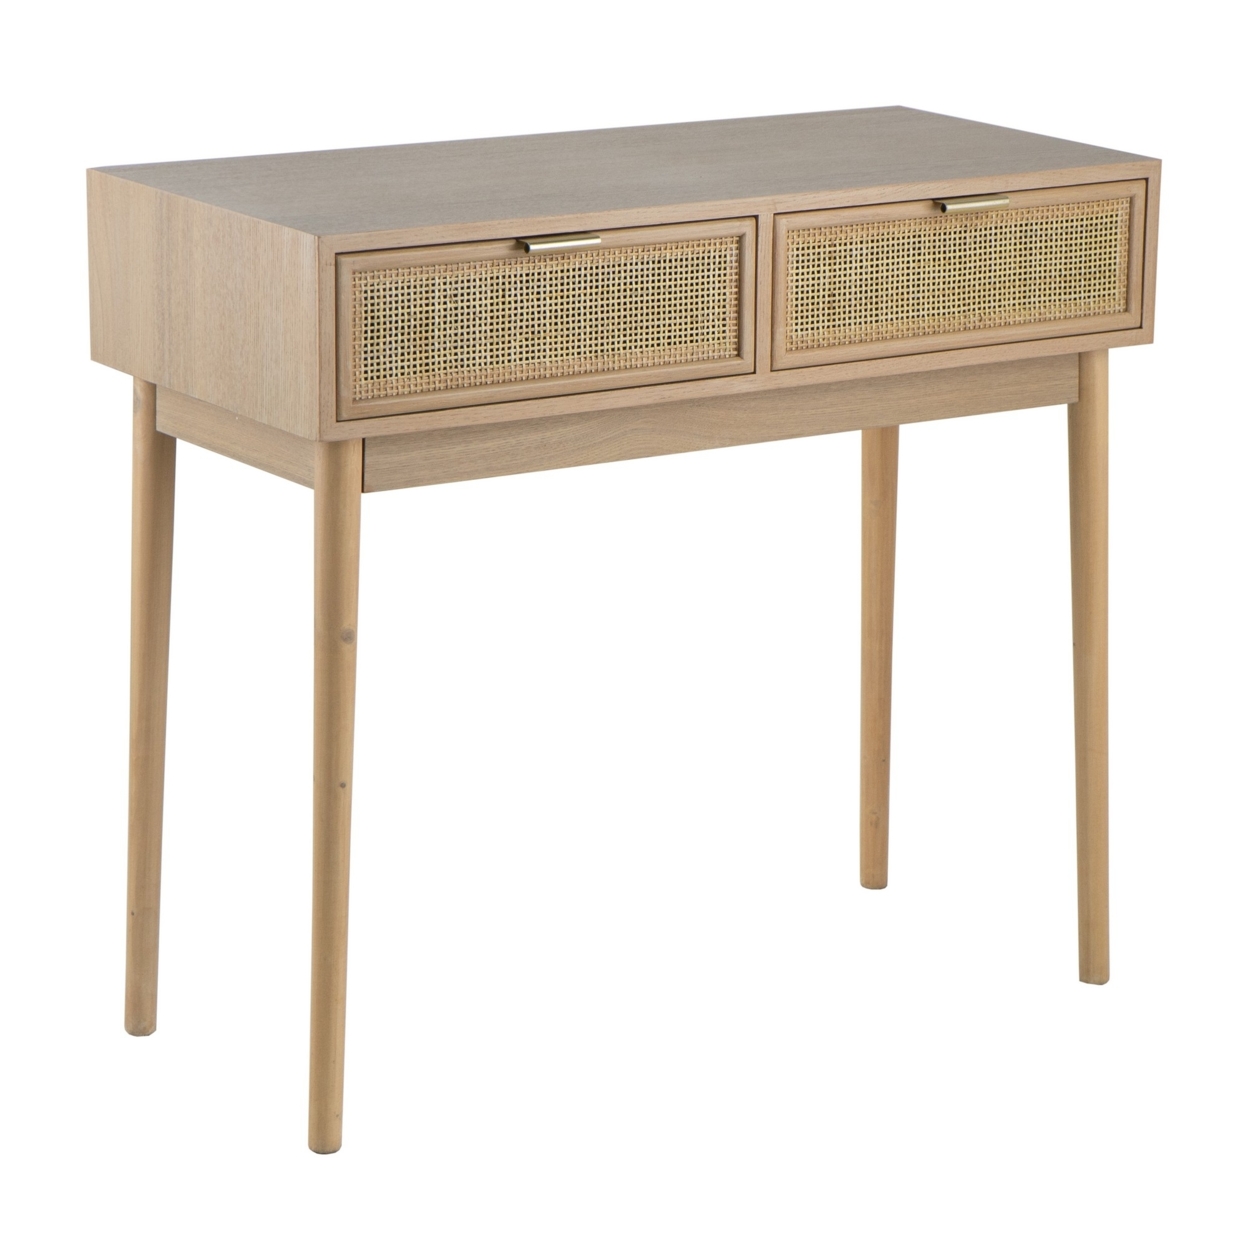 Ela 35 Inch 2 Drawer Wood Console Table, Woven Rattan Panels, Natural Brown- Saltoro Sherpi